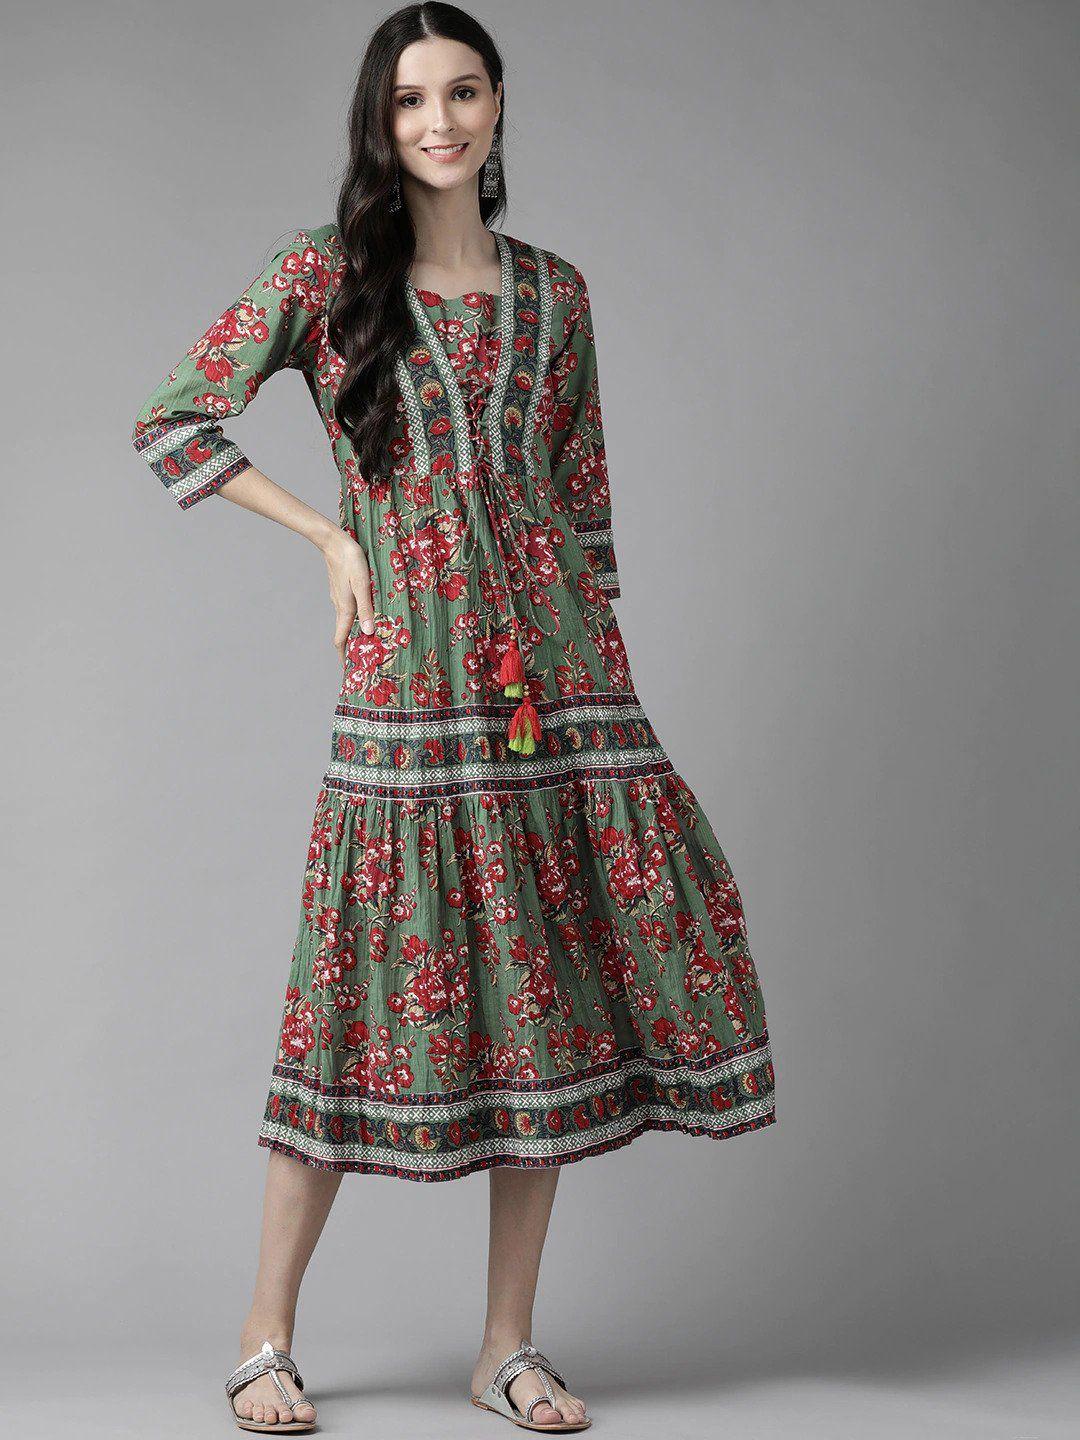 rain & rainbow floral printed midi-length pure cotton ethnic dresses